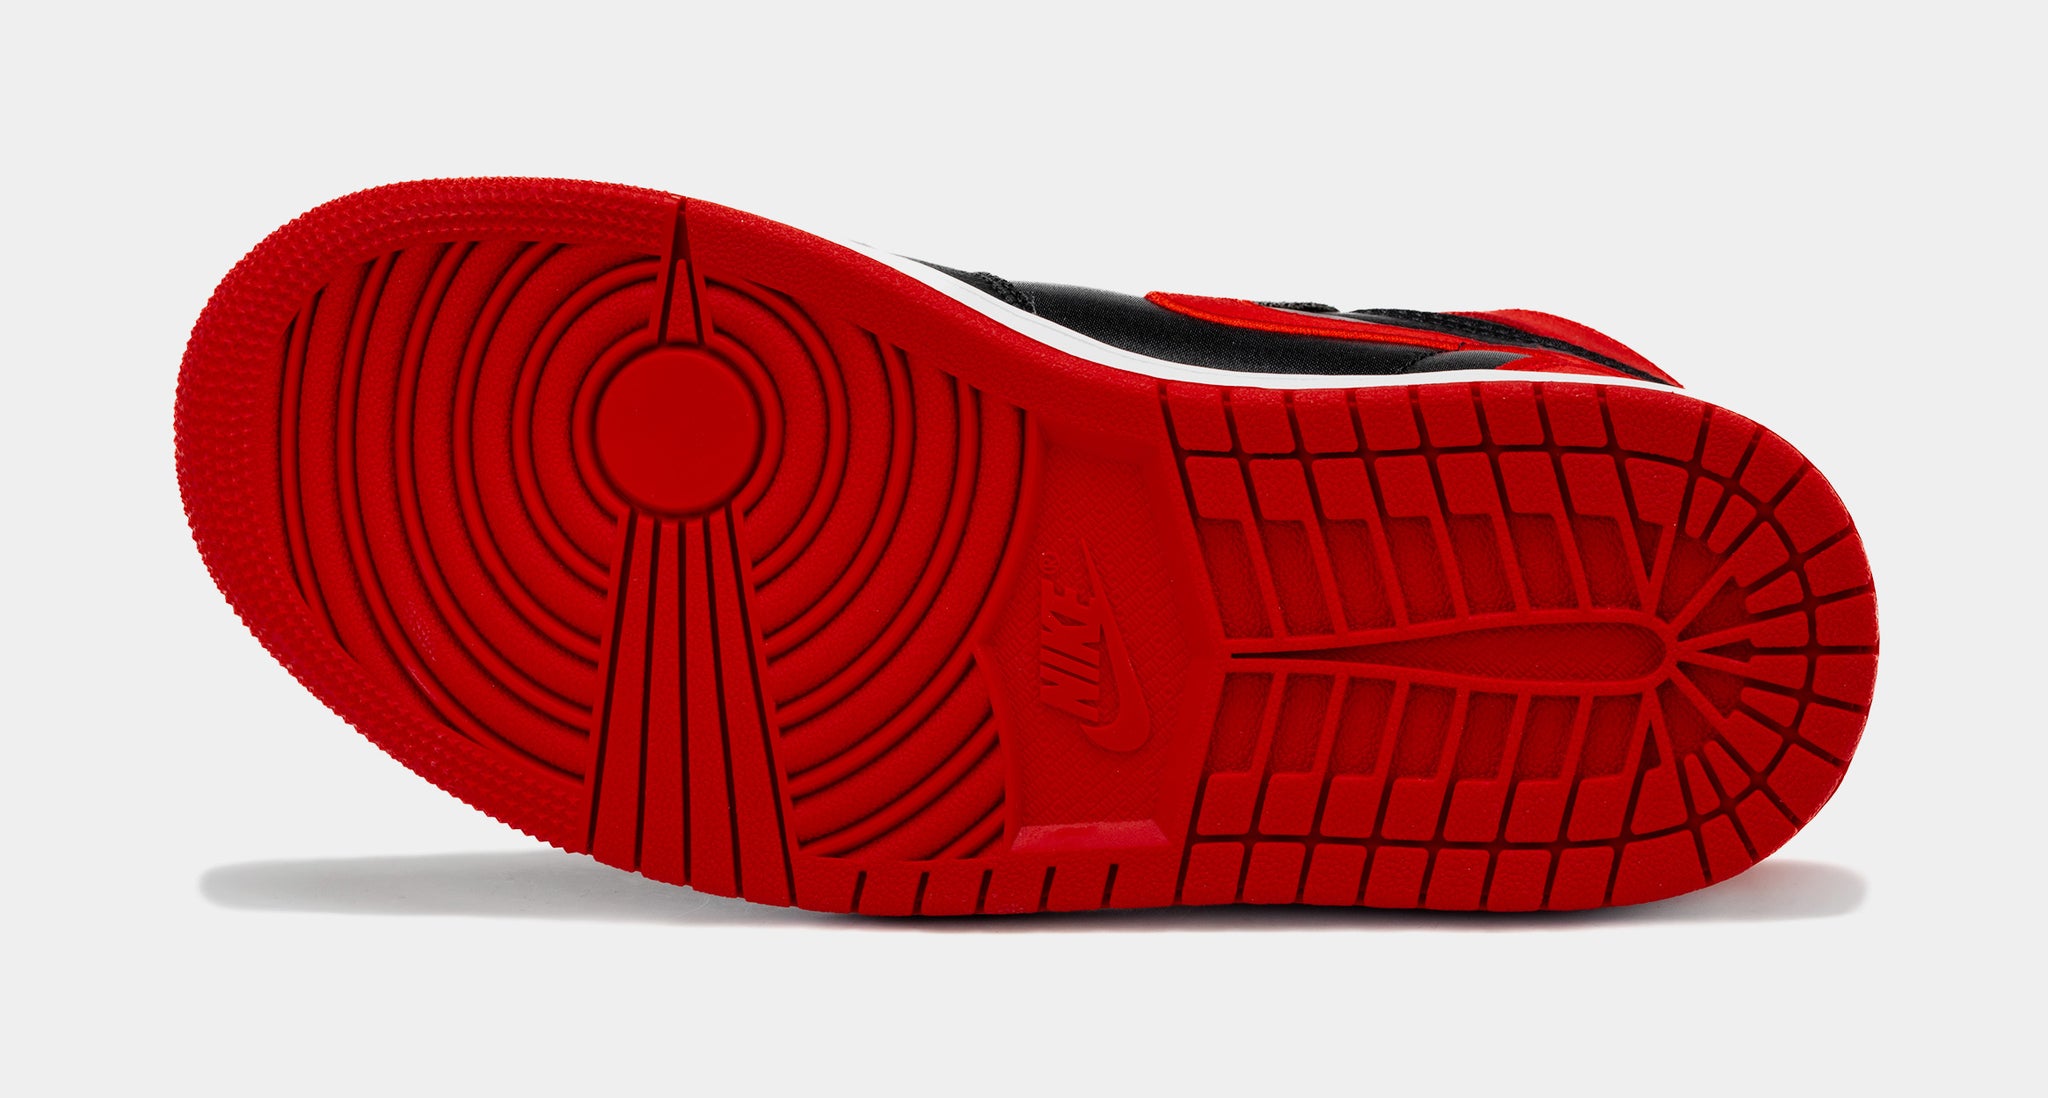 Jordan Air Jordan 1 Retro High OG Royal Reimagined Mens Lifestyle Shoes  Blac DZ5485-042 – Shoe Palace